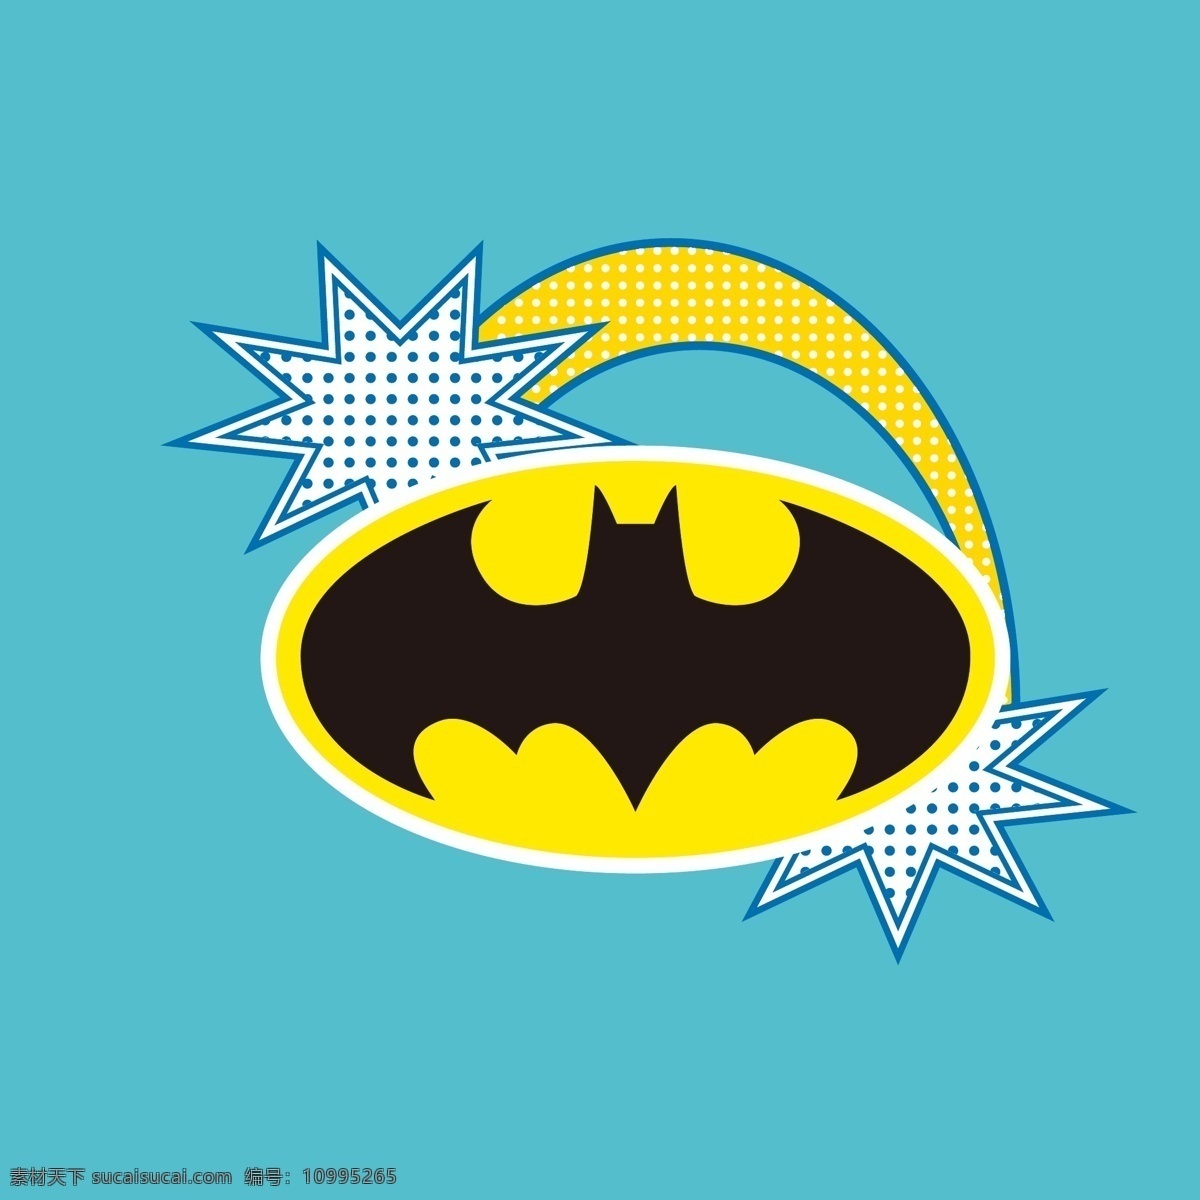 flash superman 蝙蝠侠 蝙蝠侠标志 标识标志图标 标志 超人 卡通形象 其他人物 batman 闪电侠 华纳 dc漫画 超级英雄 英雄联盟 矢量人物 矢量 超人英雄标志 小图标 网页素材